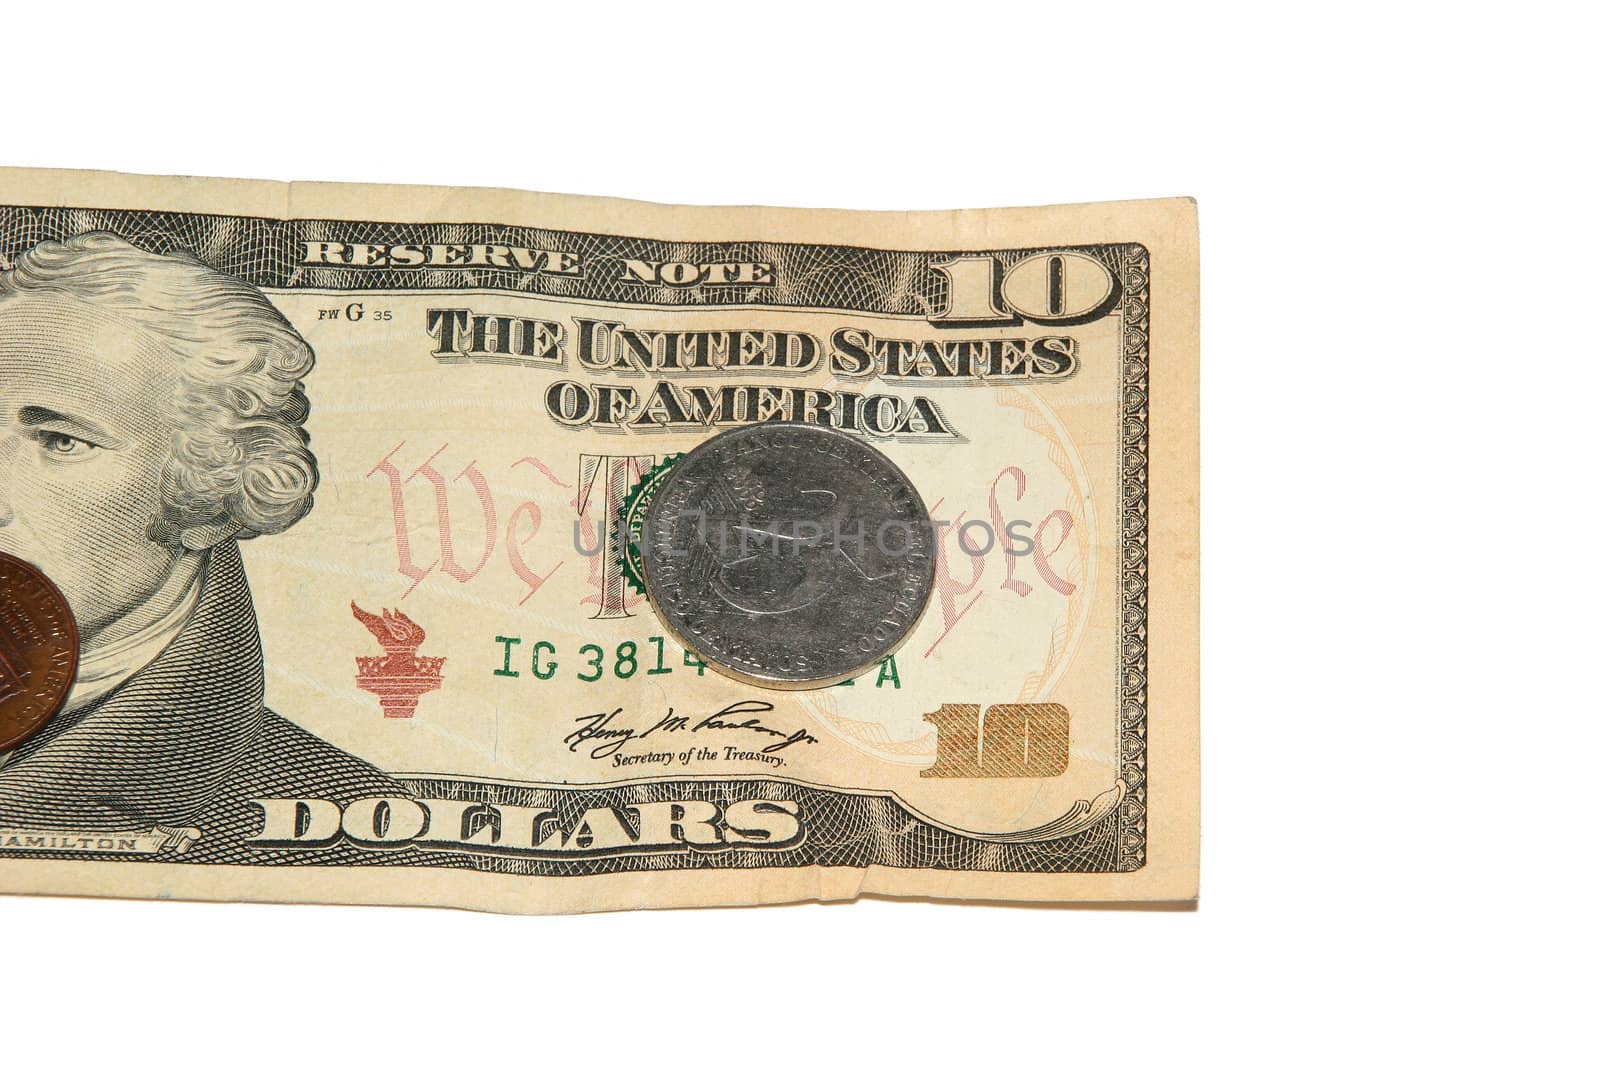 Ten U.S. dollars a ticket and a twenty-five cent piece